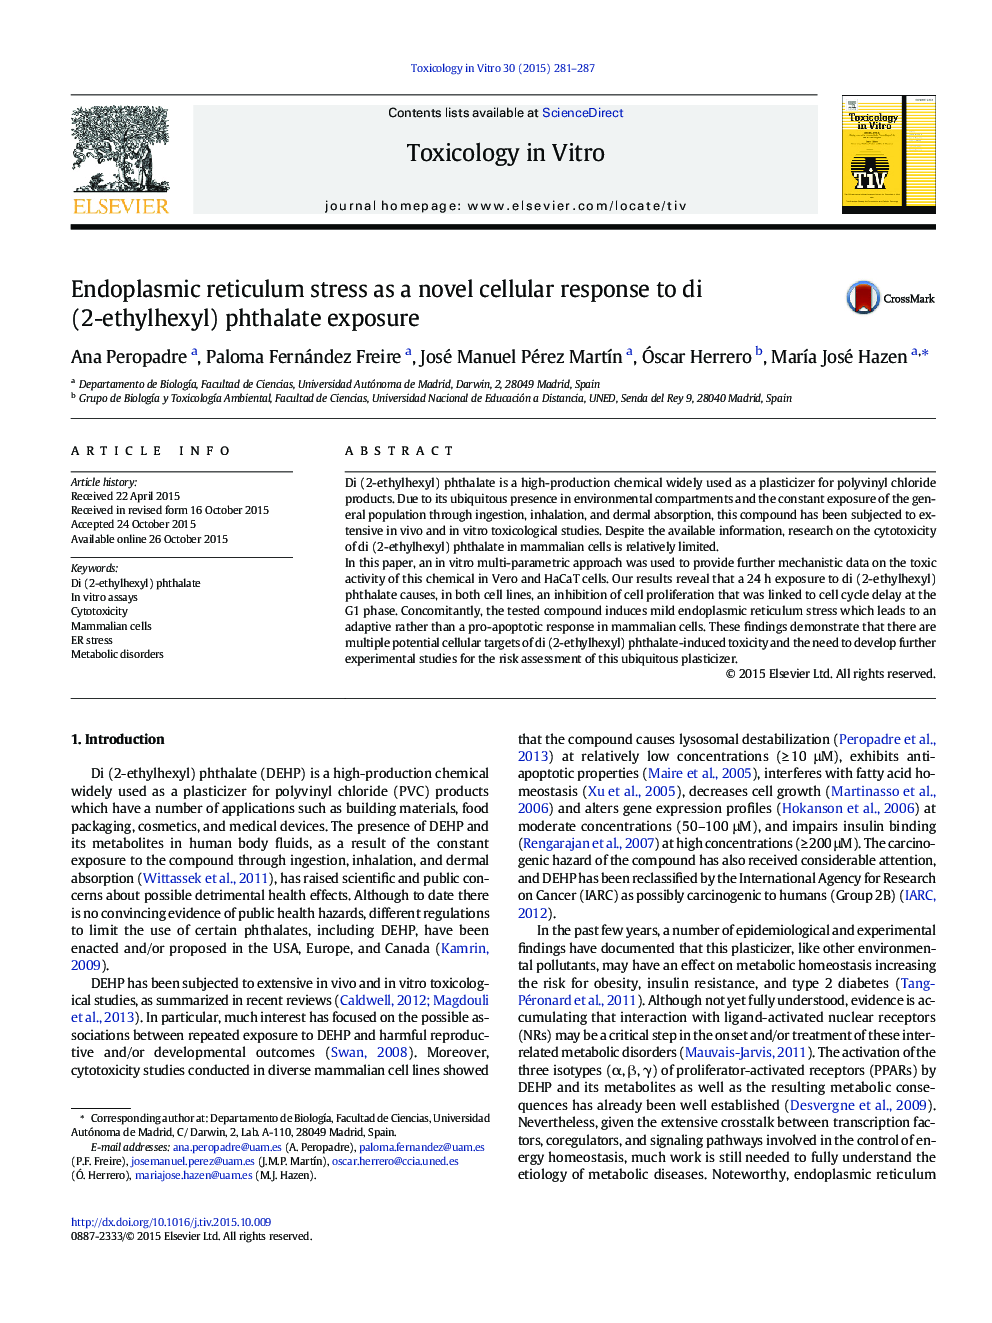 Endoplasmic reticulum stress as a novel cellular response to di (2-ethylhexyl) phthalate exposure